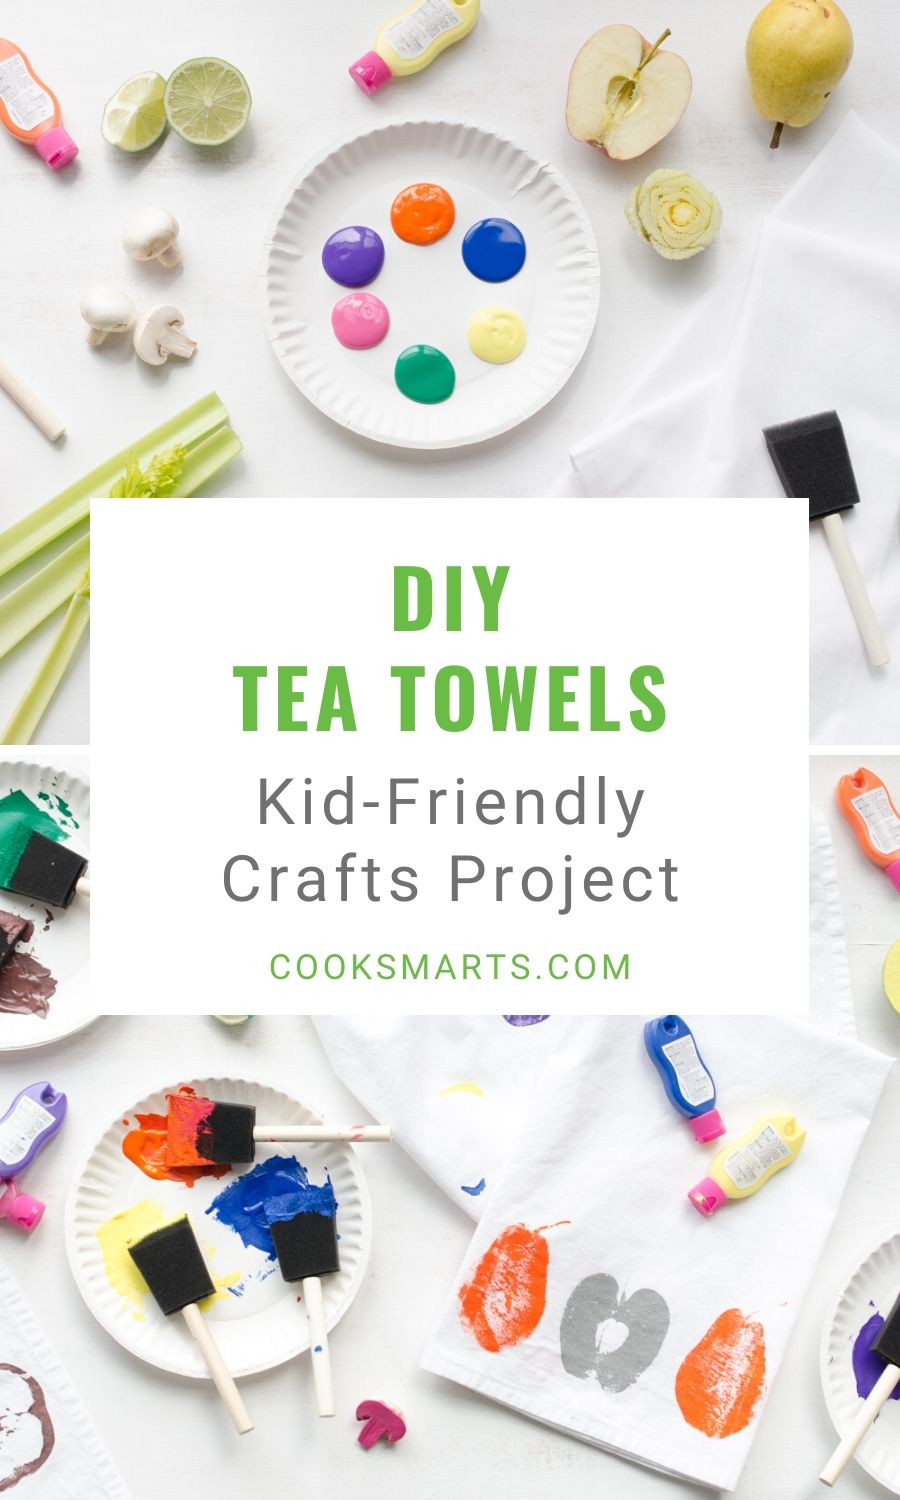 How to Make Fruit & Veggie Stamped Tea Towels | Cook Smarts